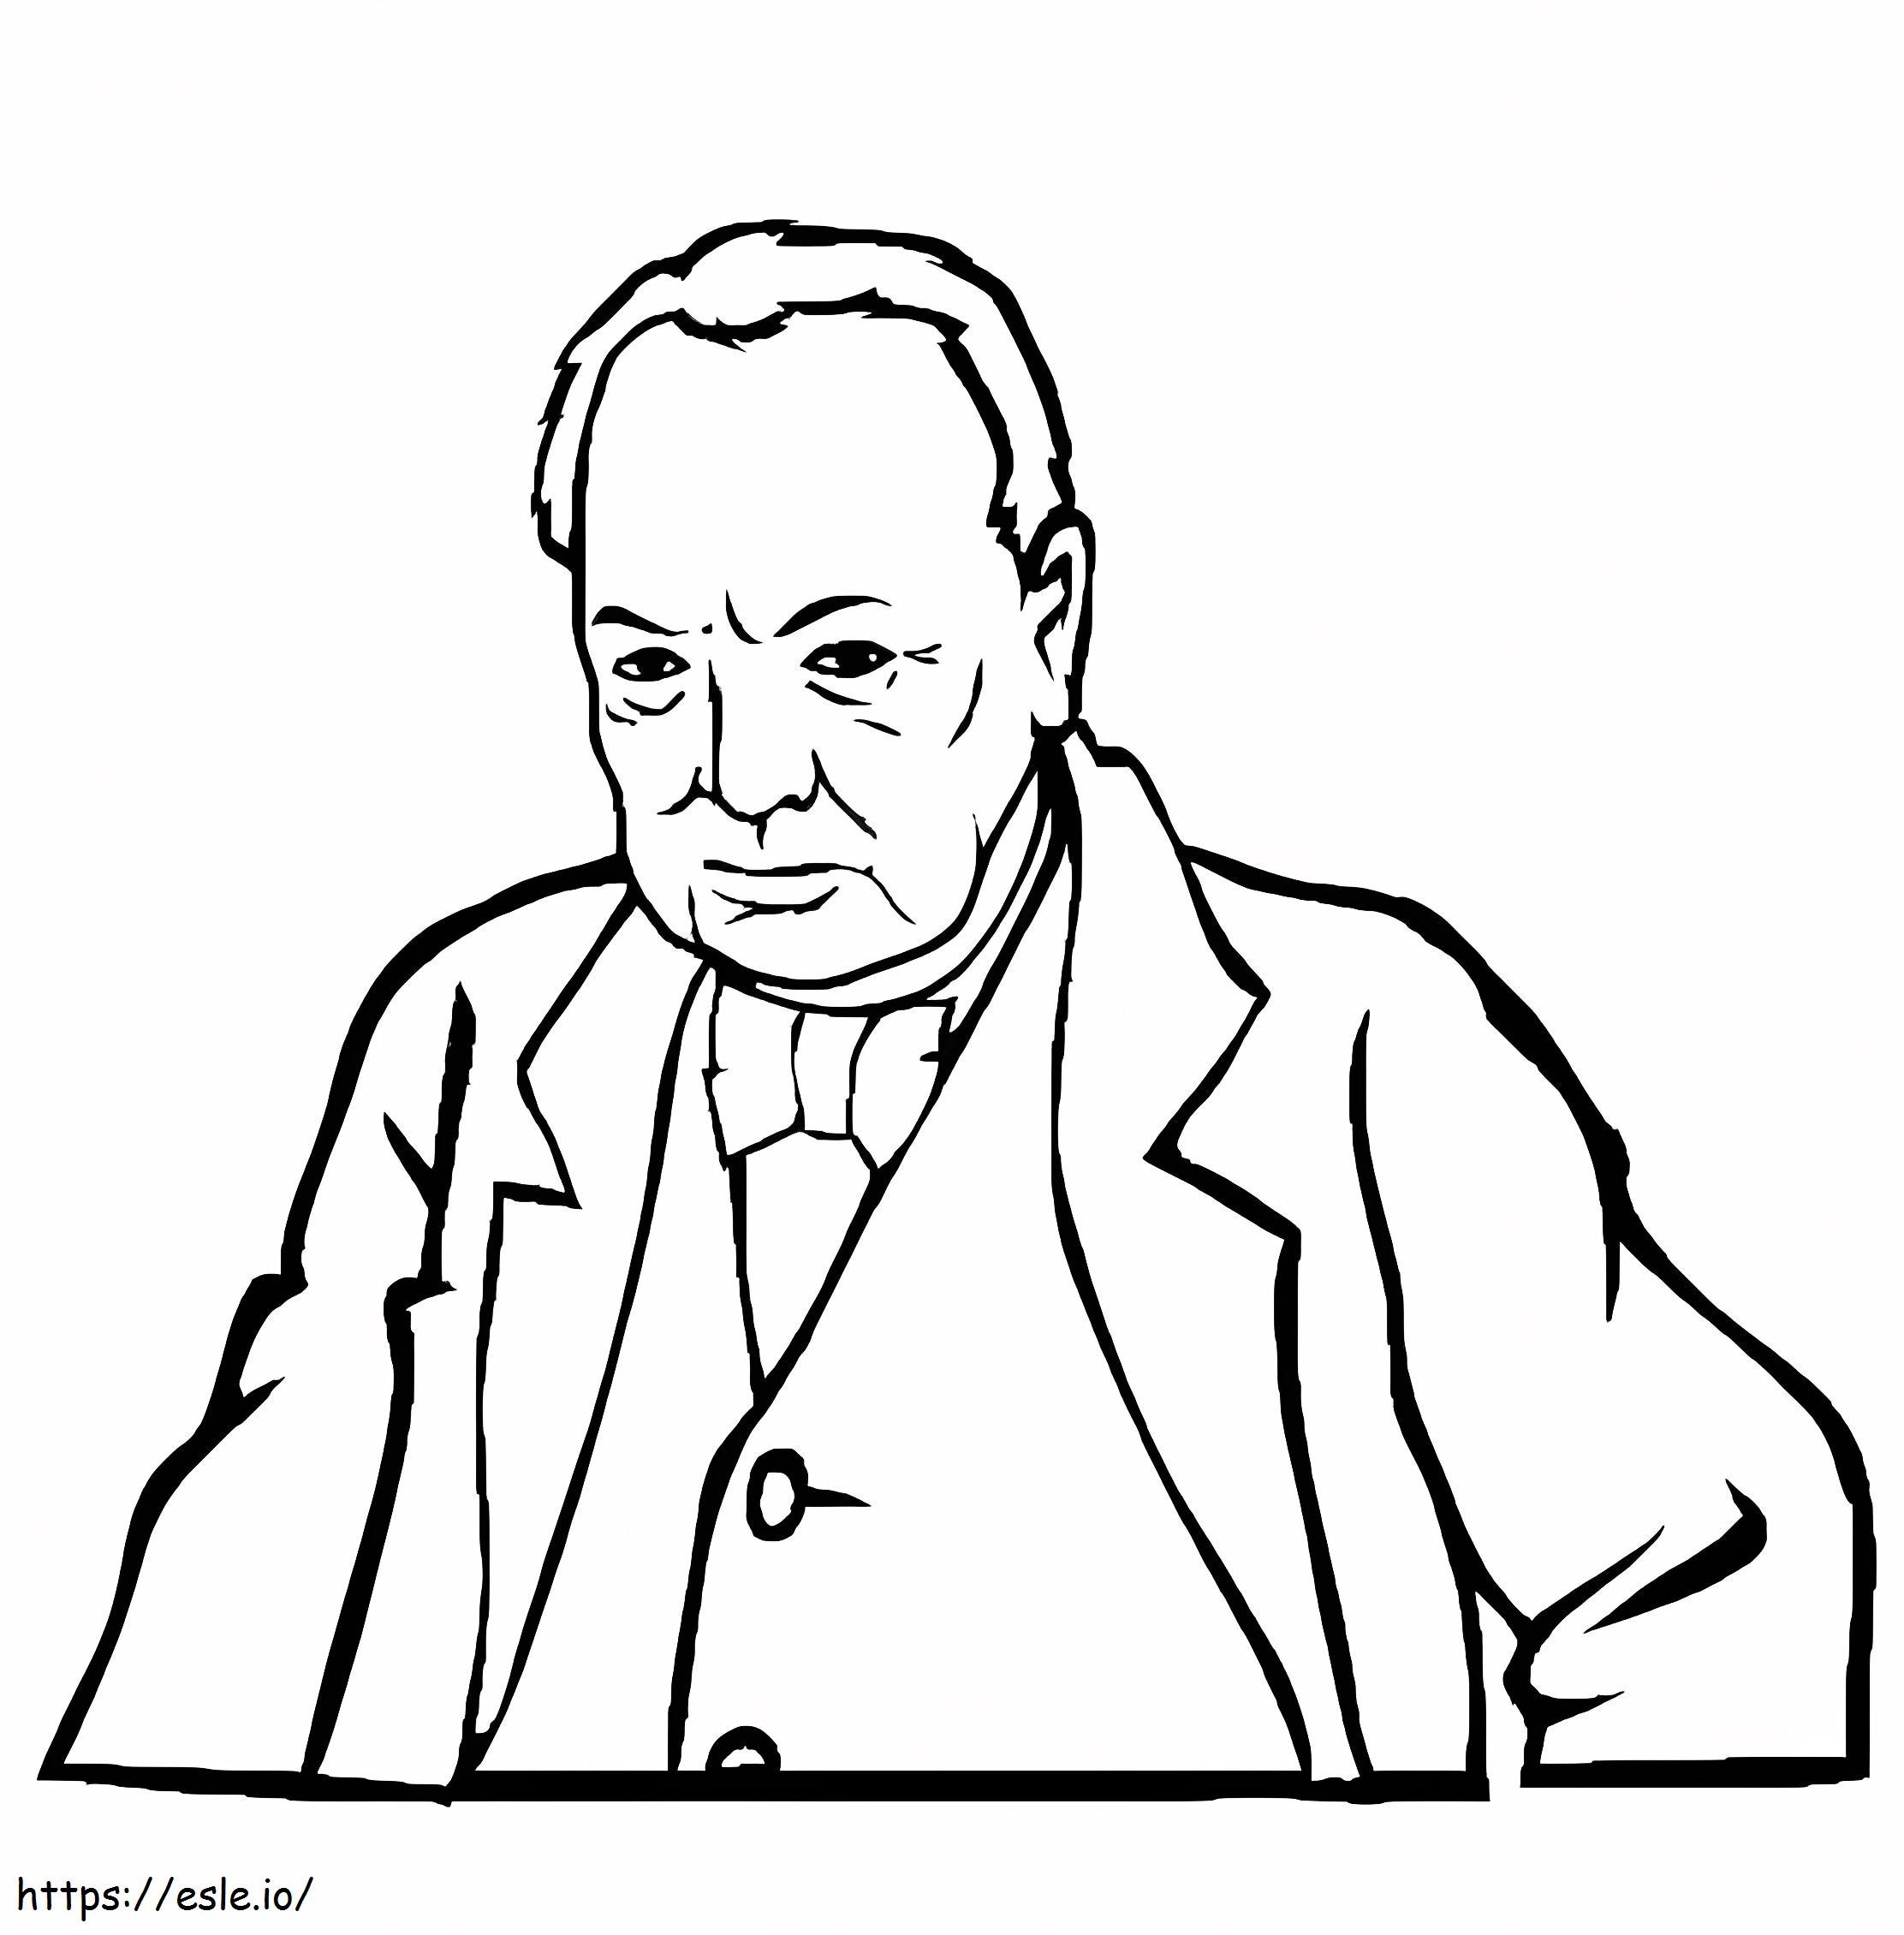 Winston Churchill 3 coloring page